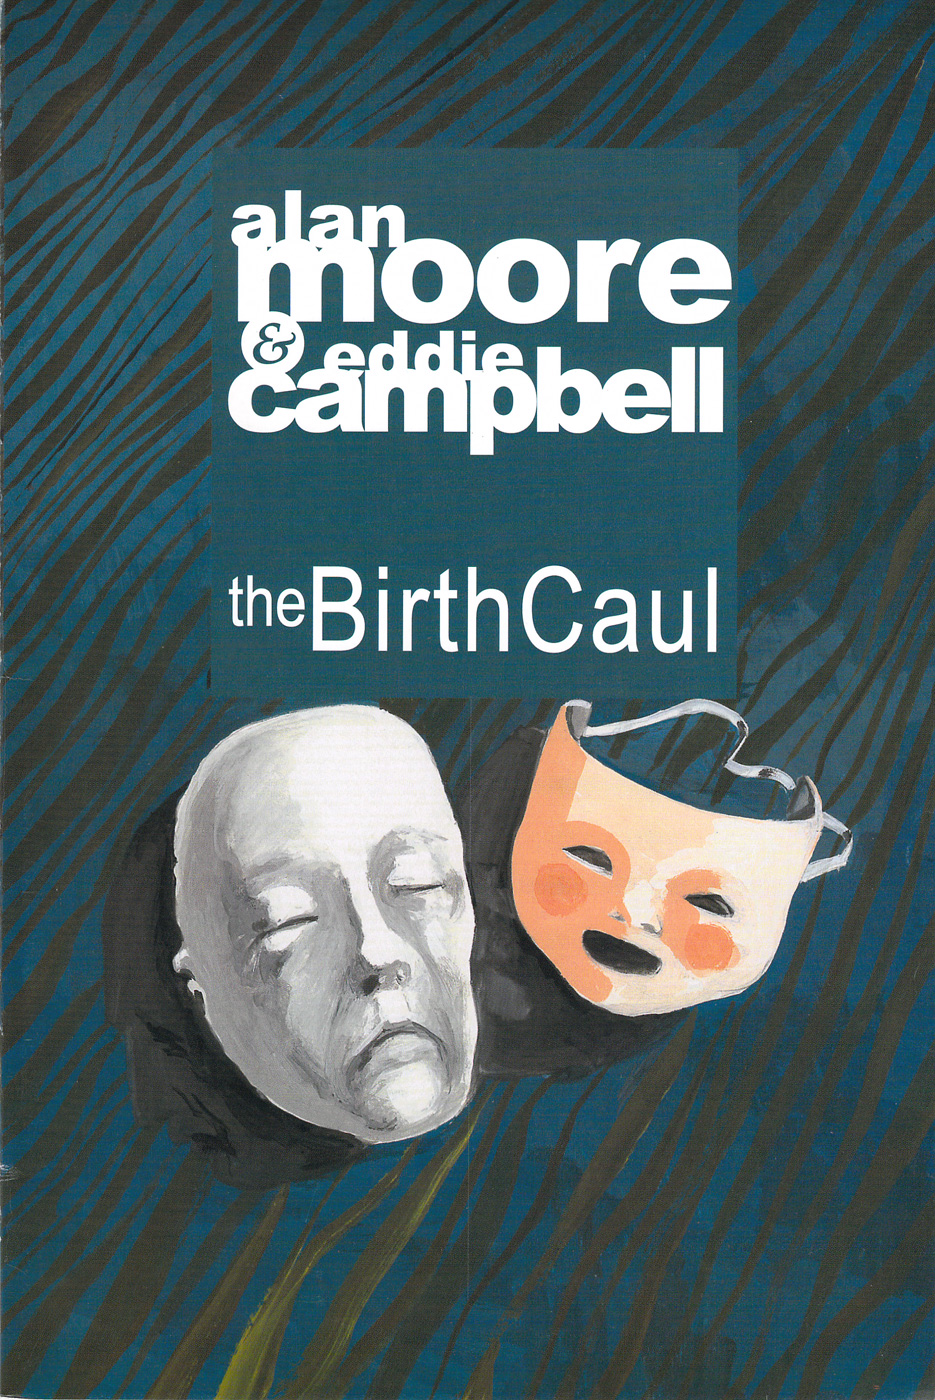 Read online The Birth Caul comic -  Issue # Full - 1